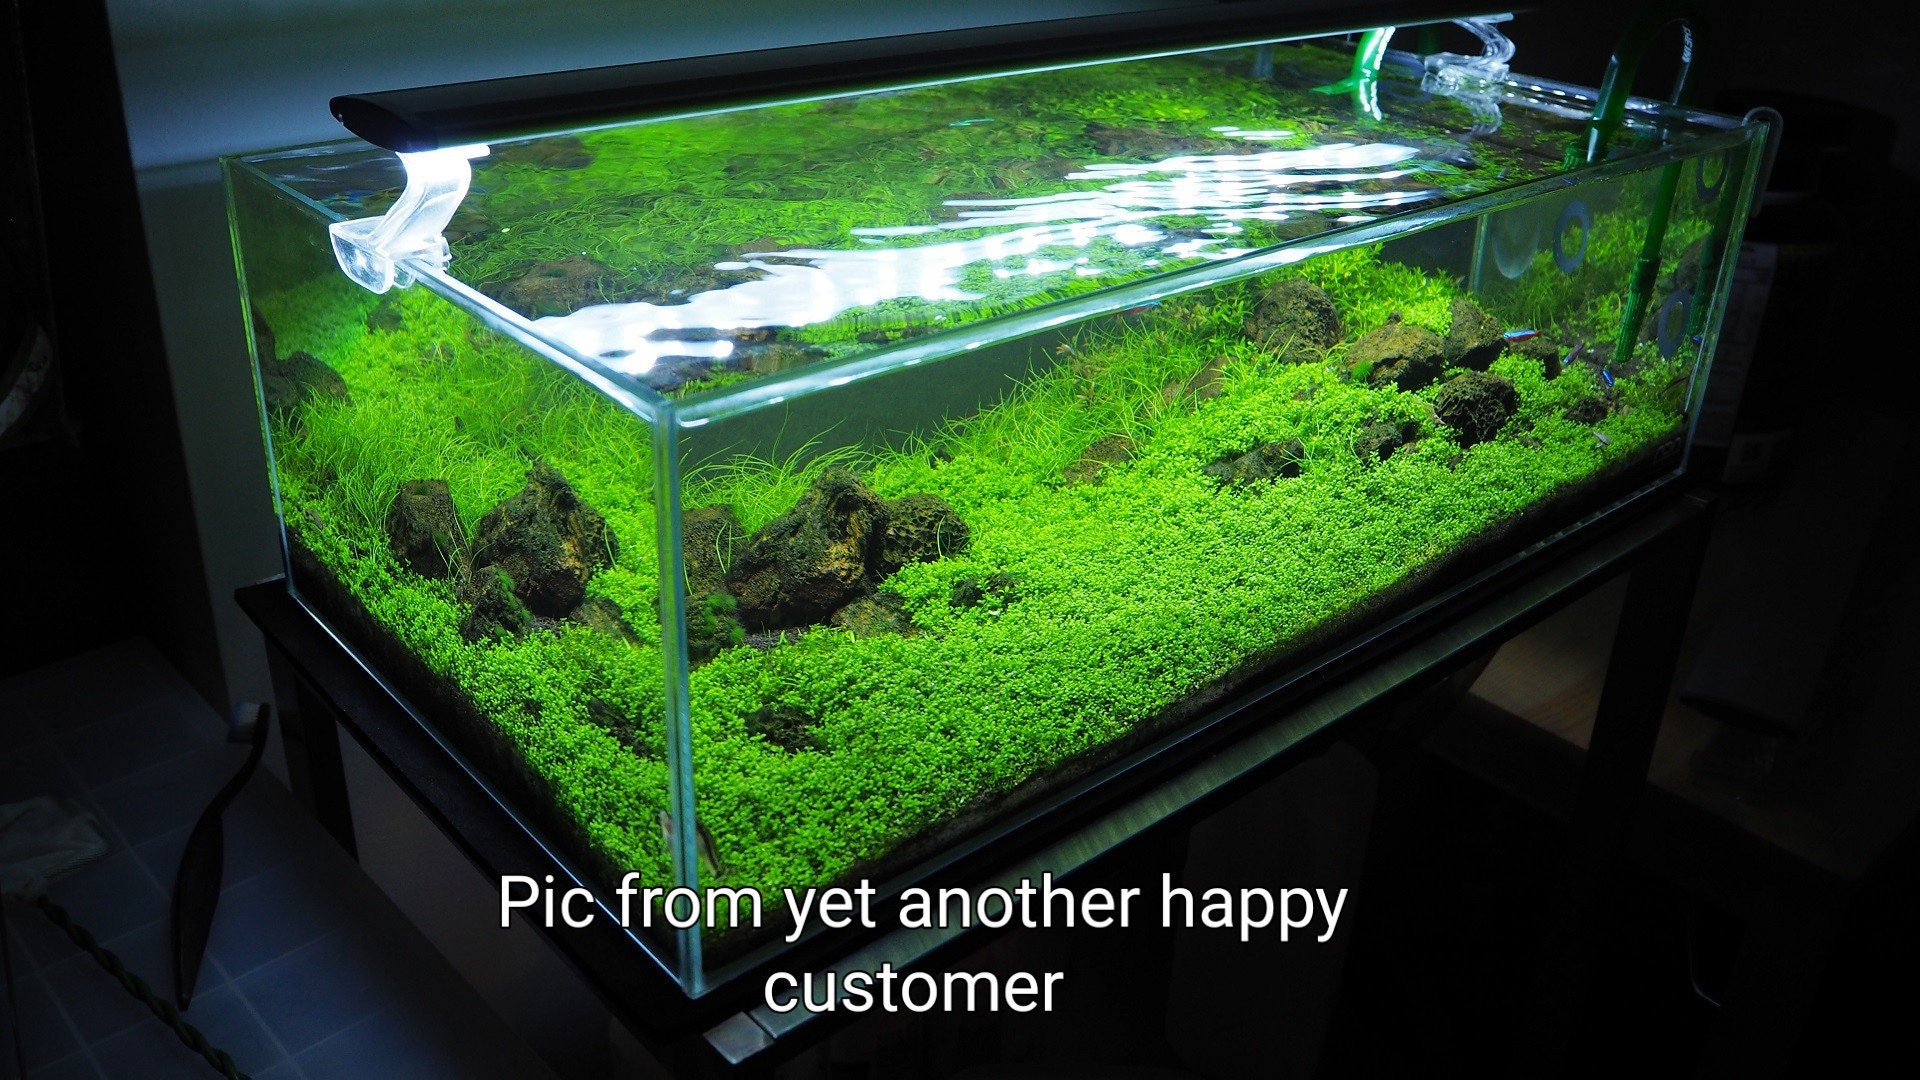 500g Aquarium Plant Seed Soil Fish Tank Accessories Decoration Aquatic Grass  Mud